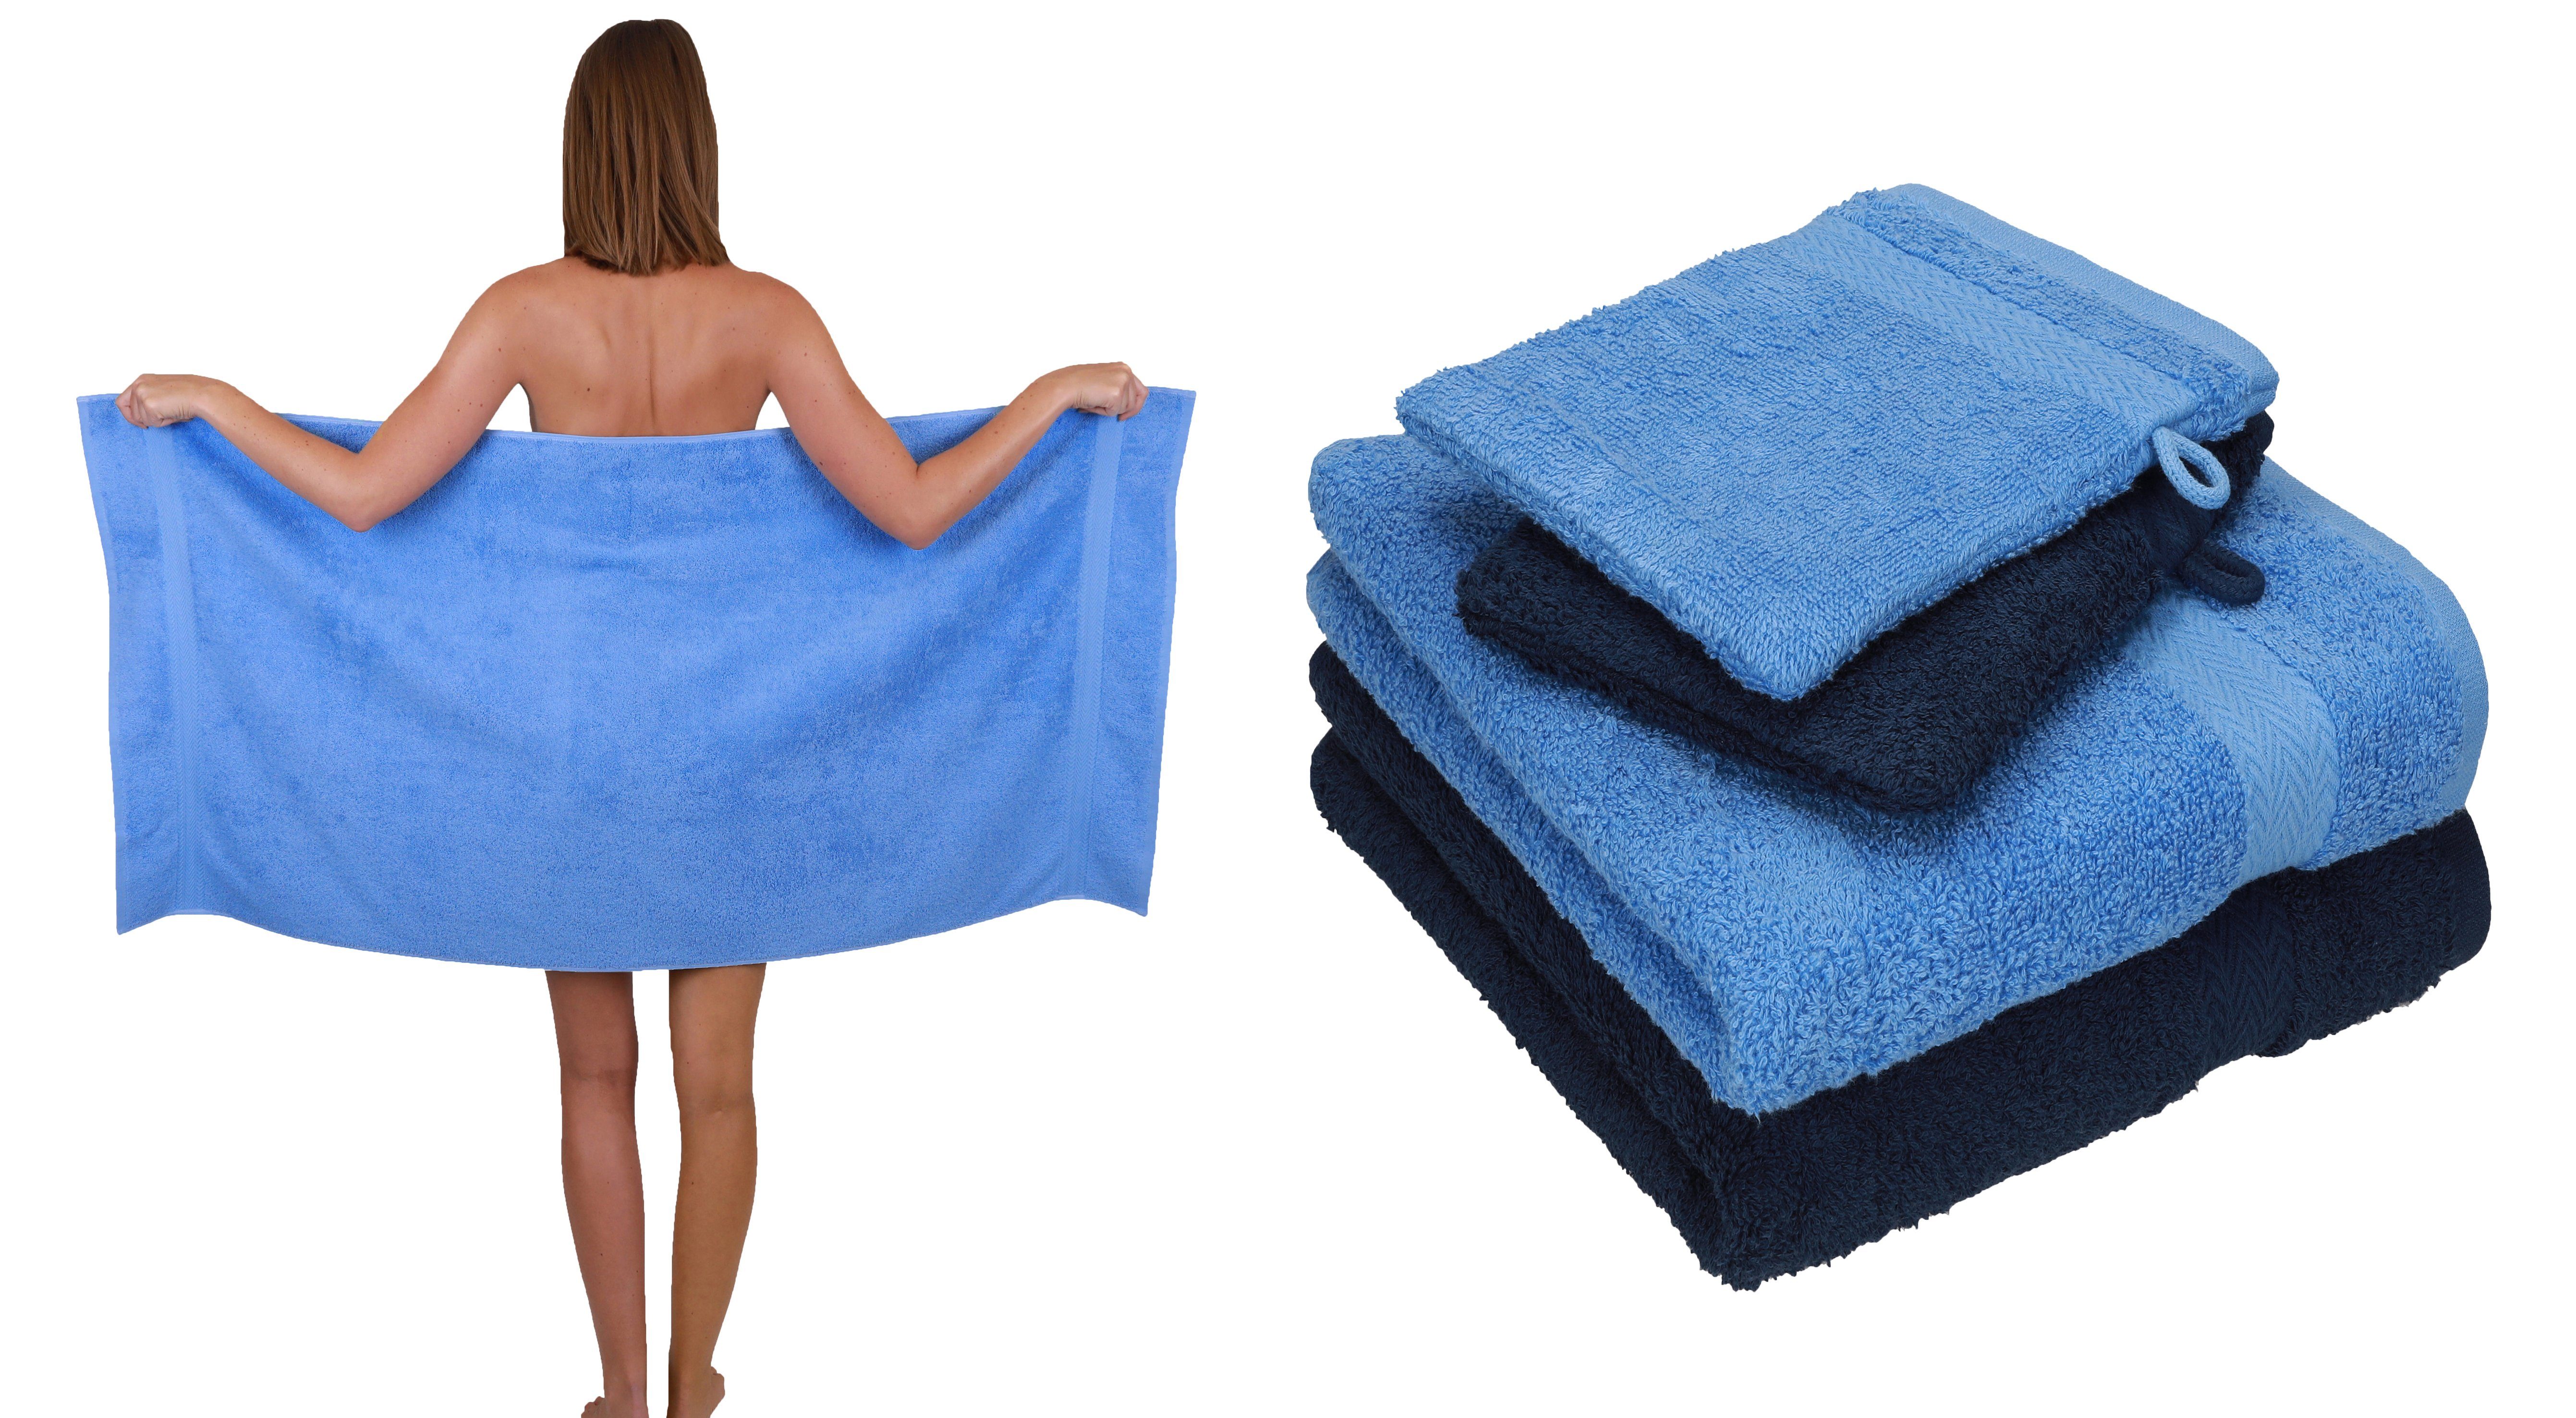 Betz Handtuch Set 5 TLG. Handtuch Set Single Pack 100% Baumwolle 1 Duschtuch 2 Handtücher 2 Waschhandschuhe, 100% Baumwolle hellblau-dunkelblau